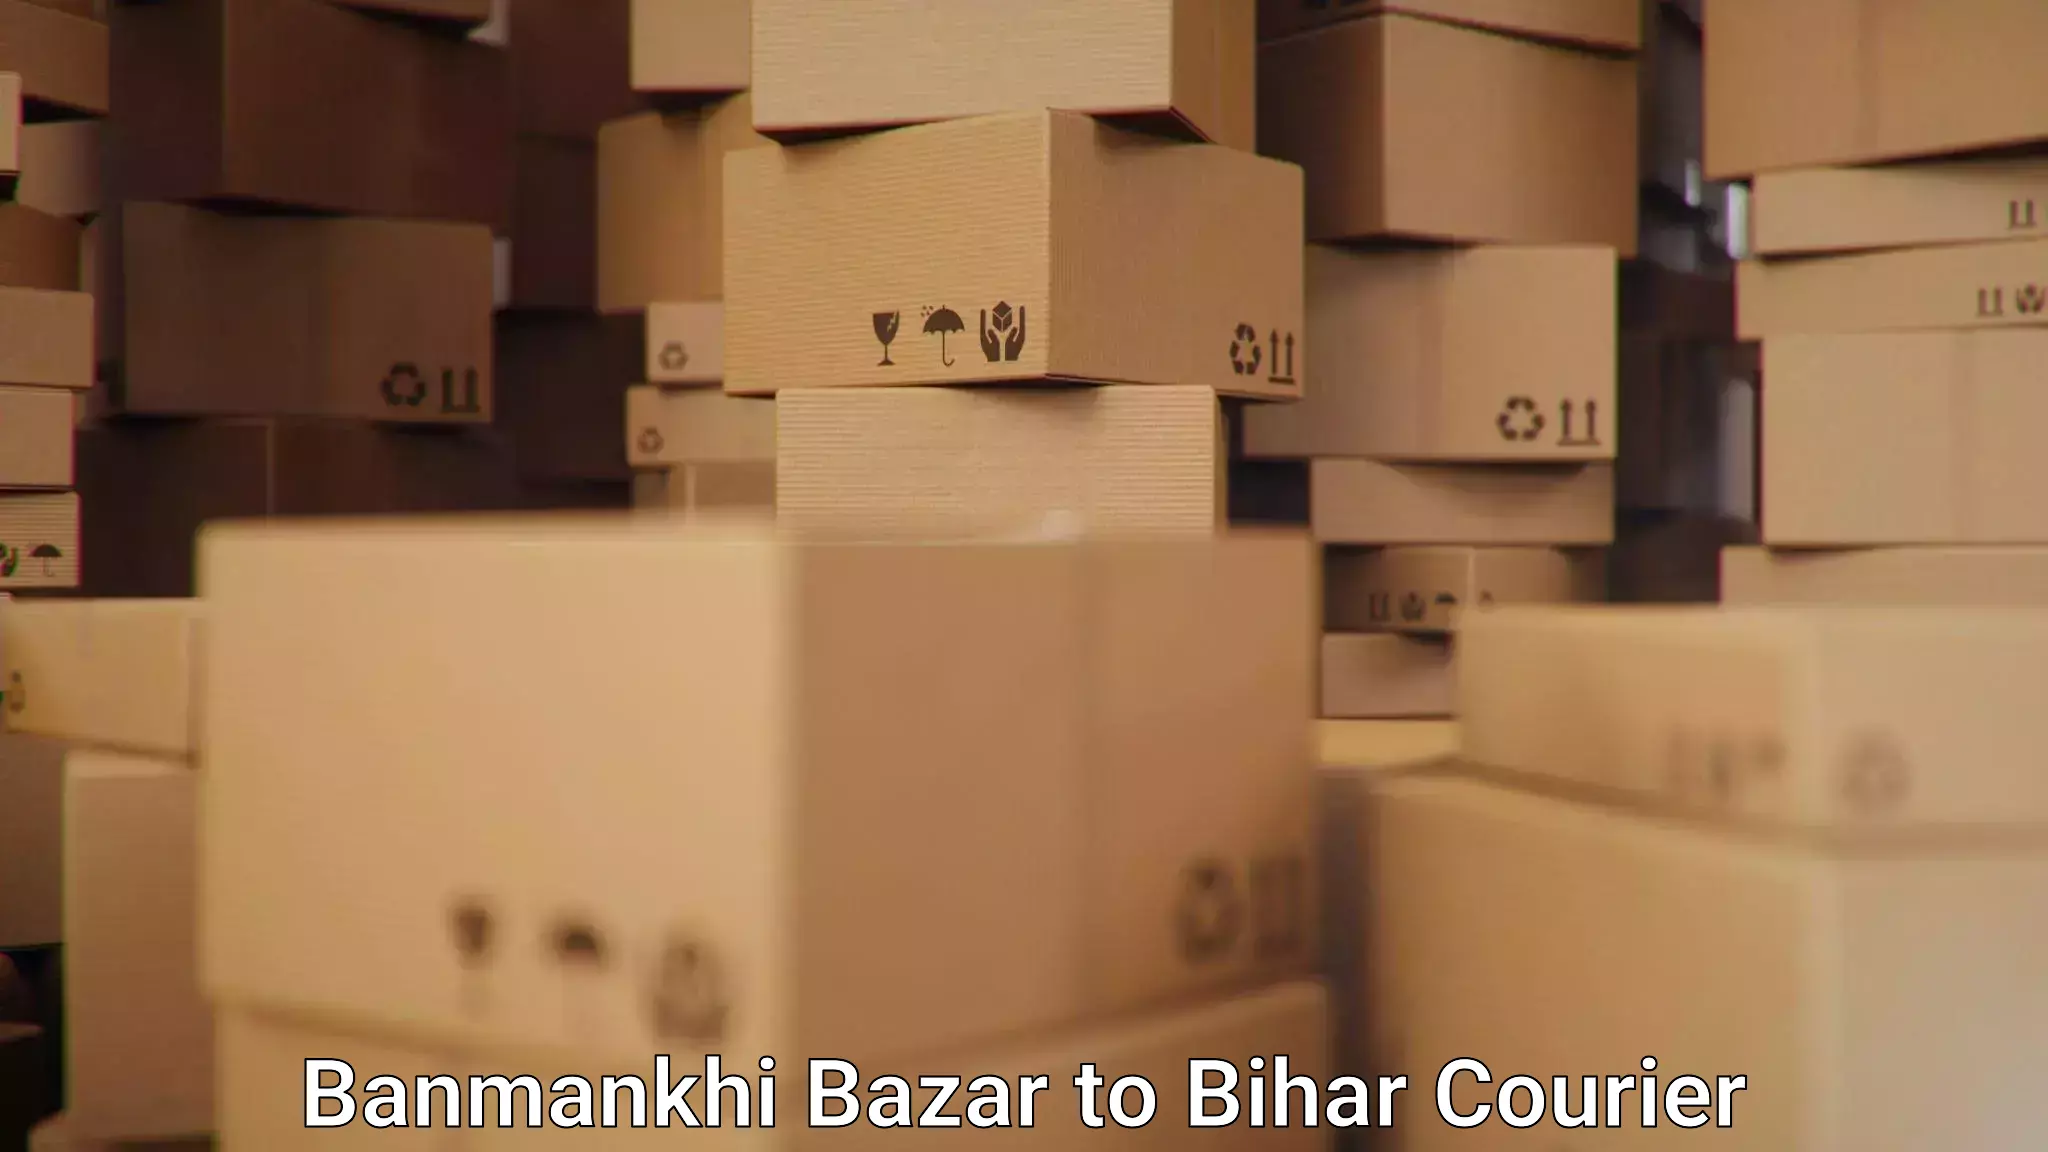 Courier service booking Banmankhi Bazar to Dholi Moraul